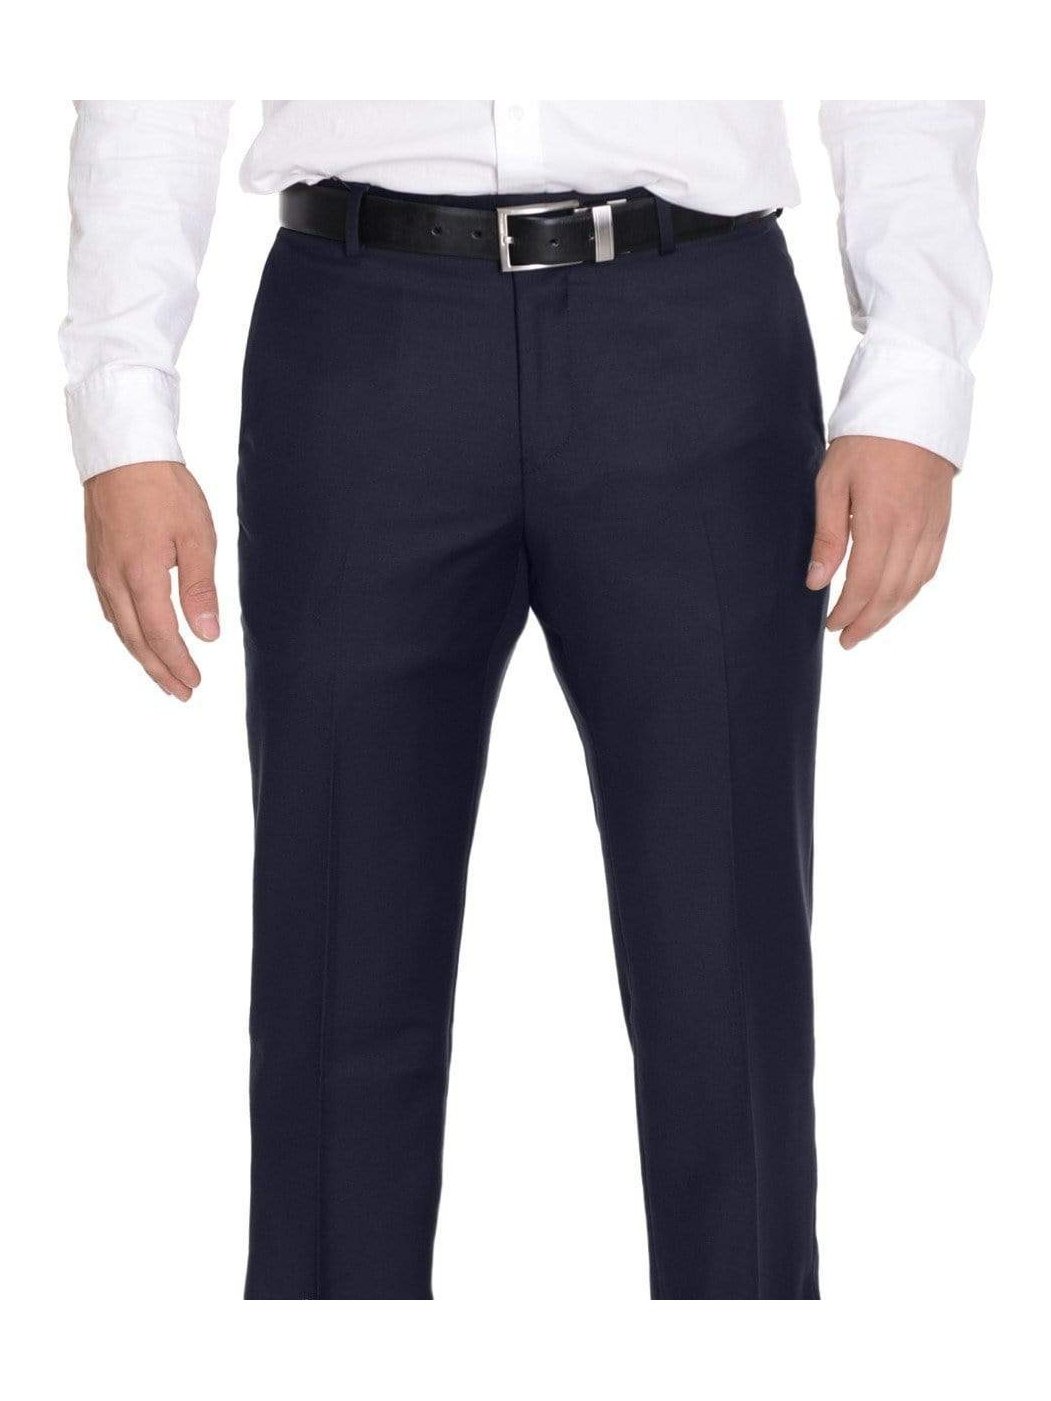 Murano | Pants | Murano Evan Extra Slim Fit Mens Dress Pants Size 3x30 New  Wtag | Poshmark